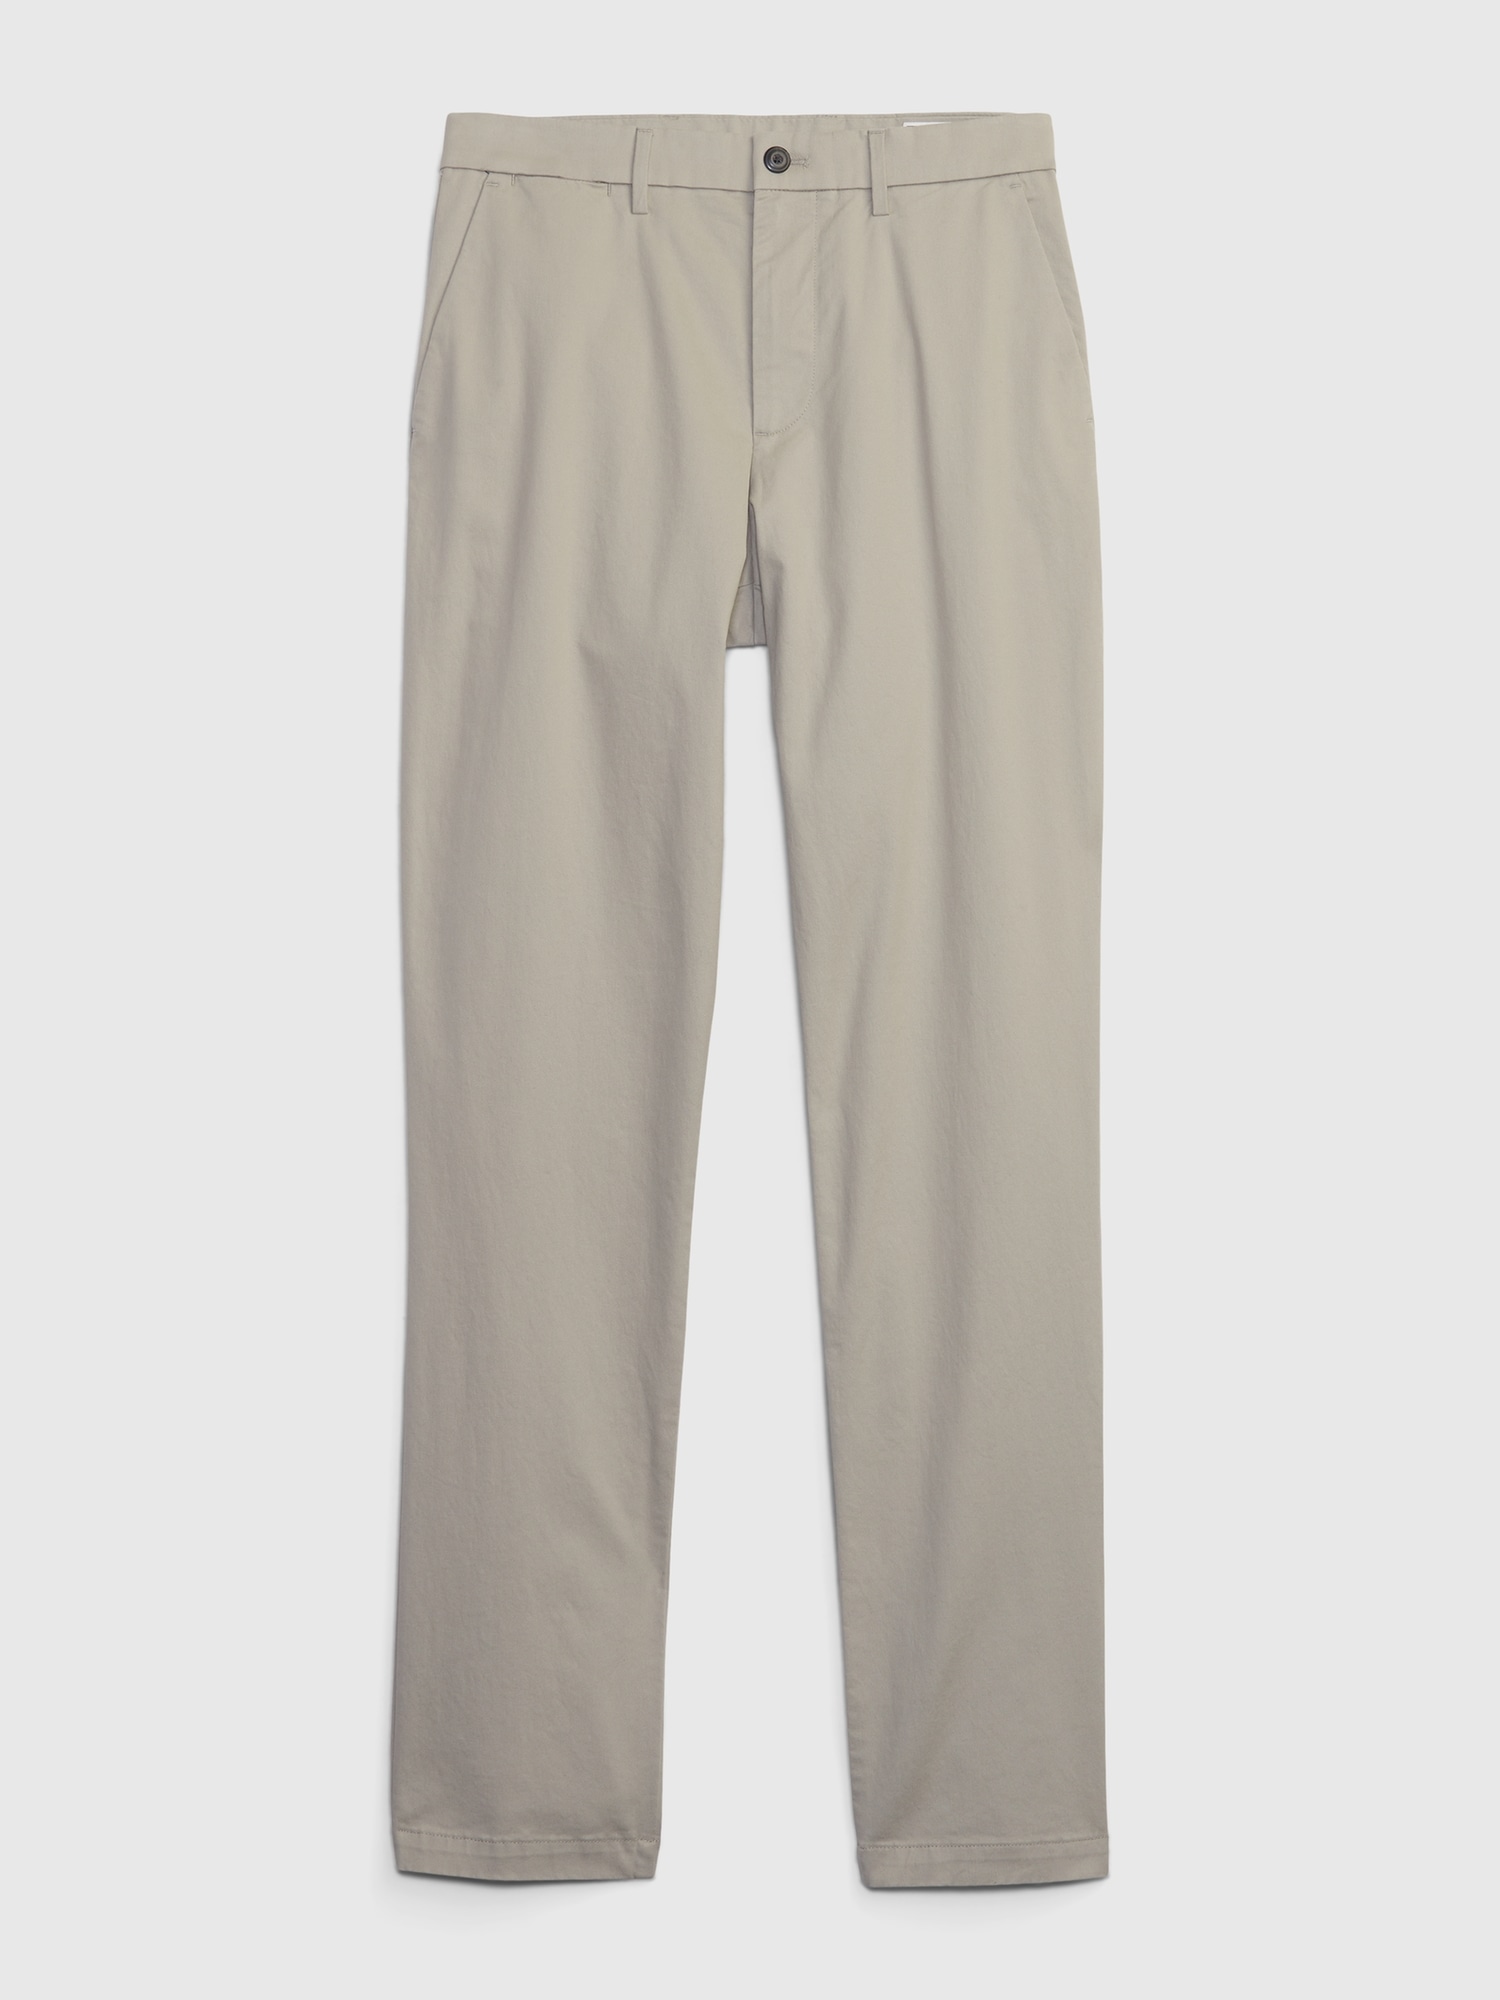 GAP Classic Fit mens dress pants slacks 33 x 32 brown tweed EUC | eBay